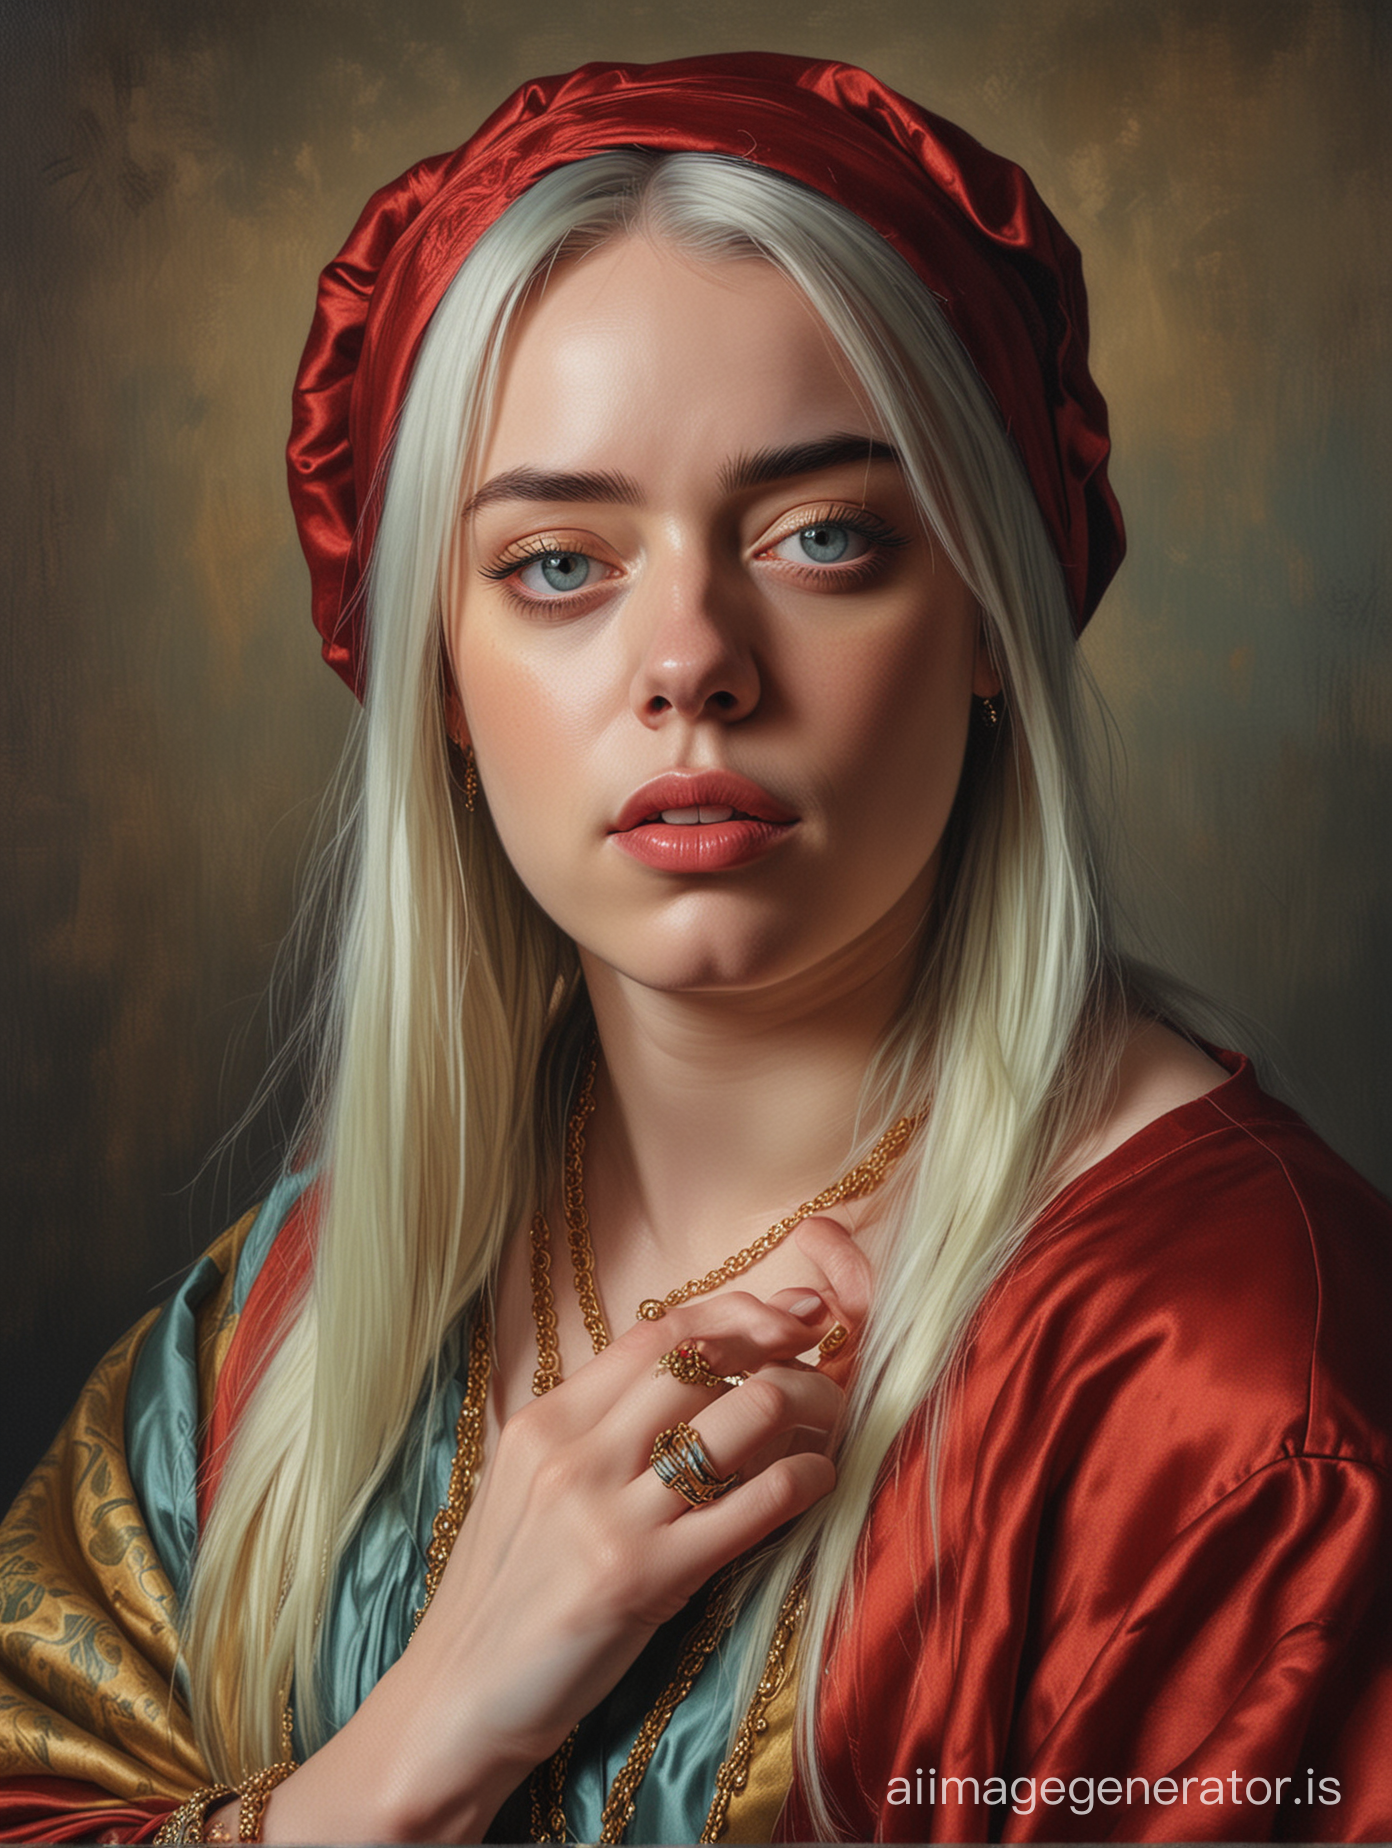 Portrait of billie eilish in Renaissance oil painting style: Emphasizes rich colors, dramatic lighting, and elegant fabrics.